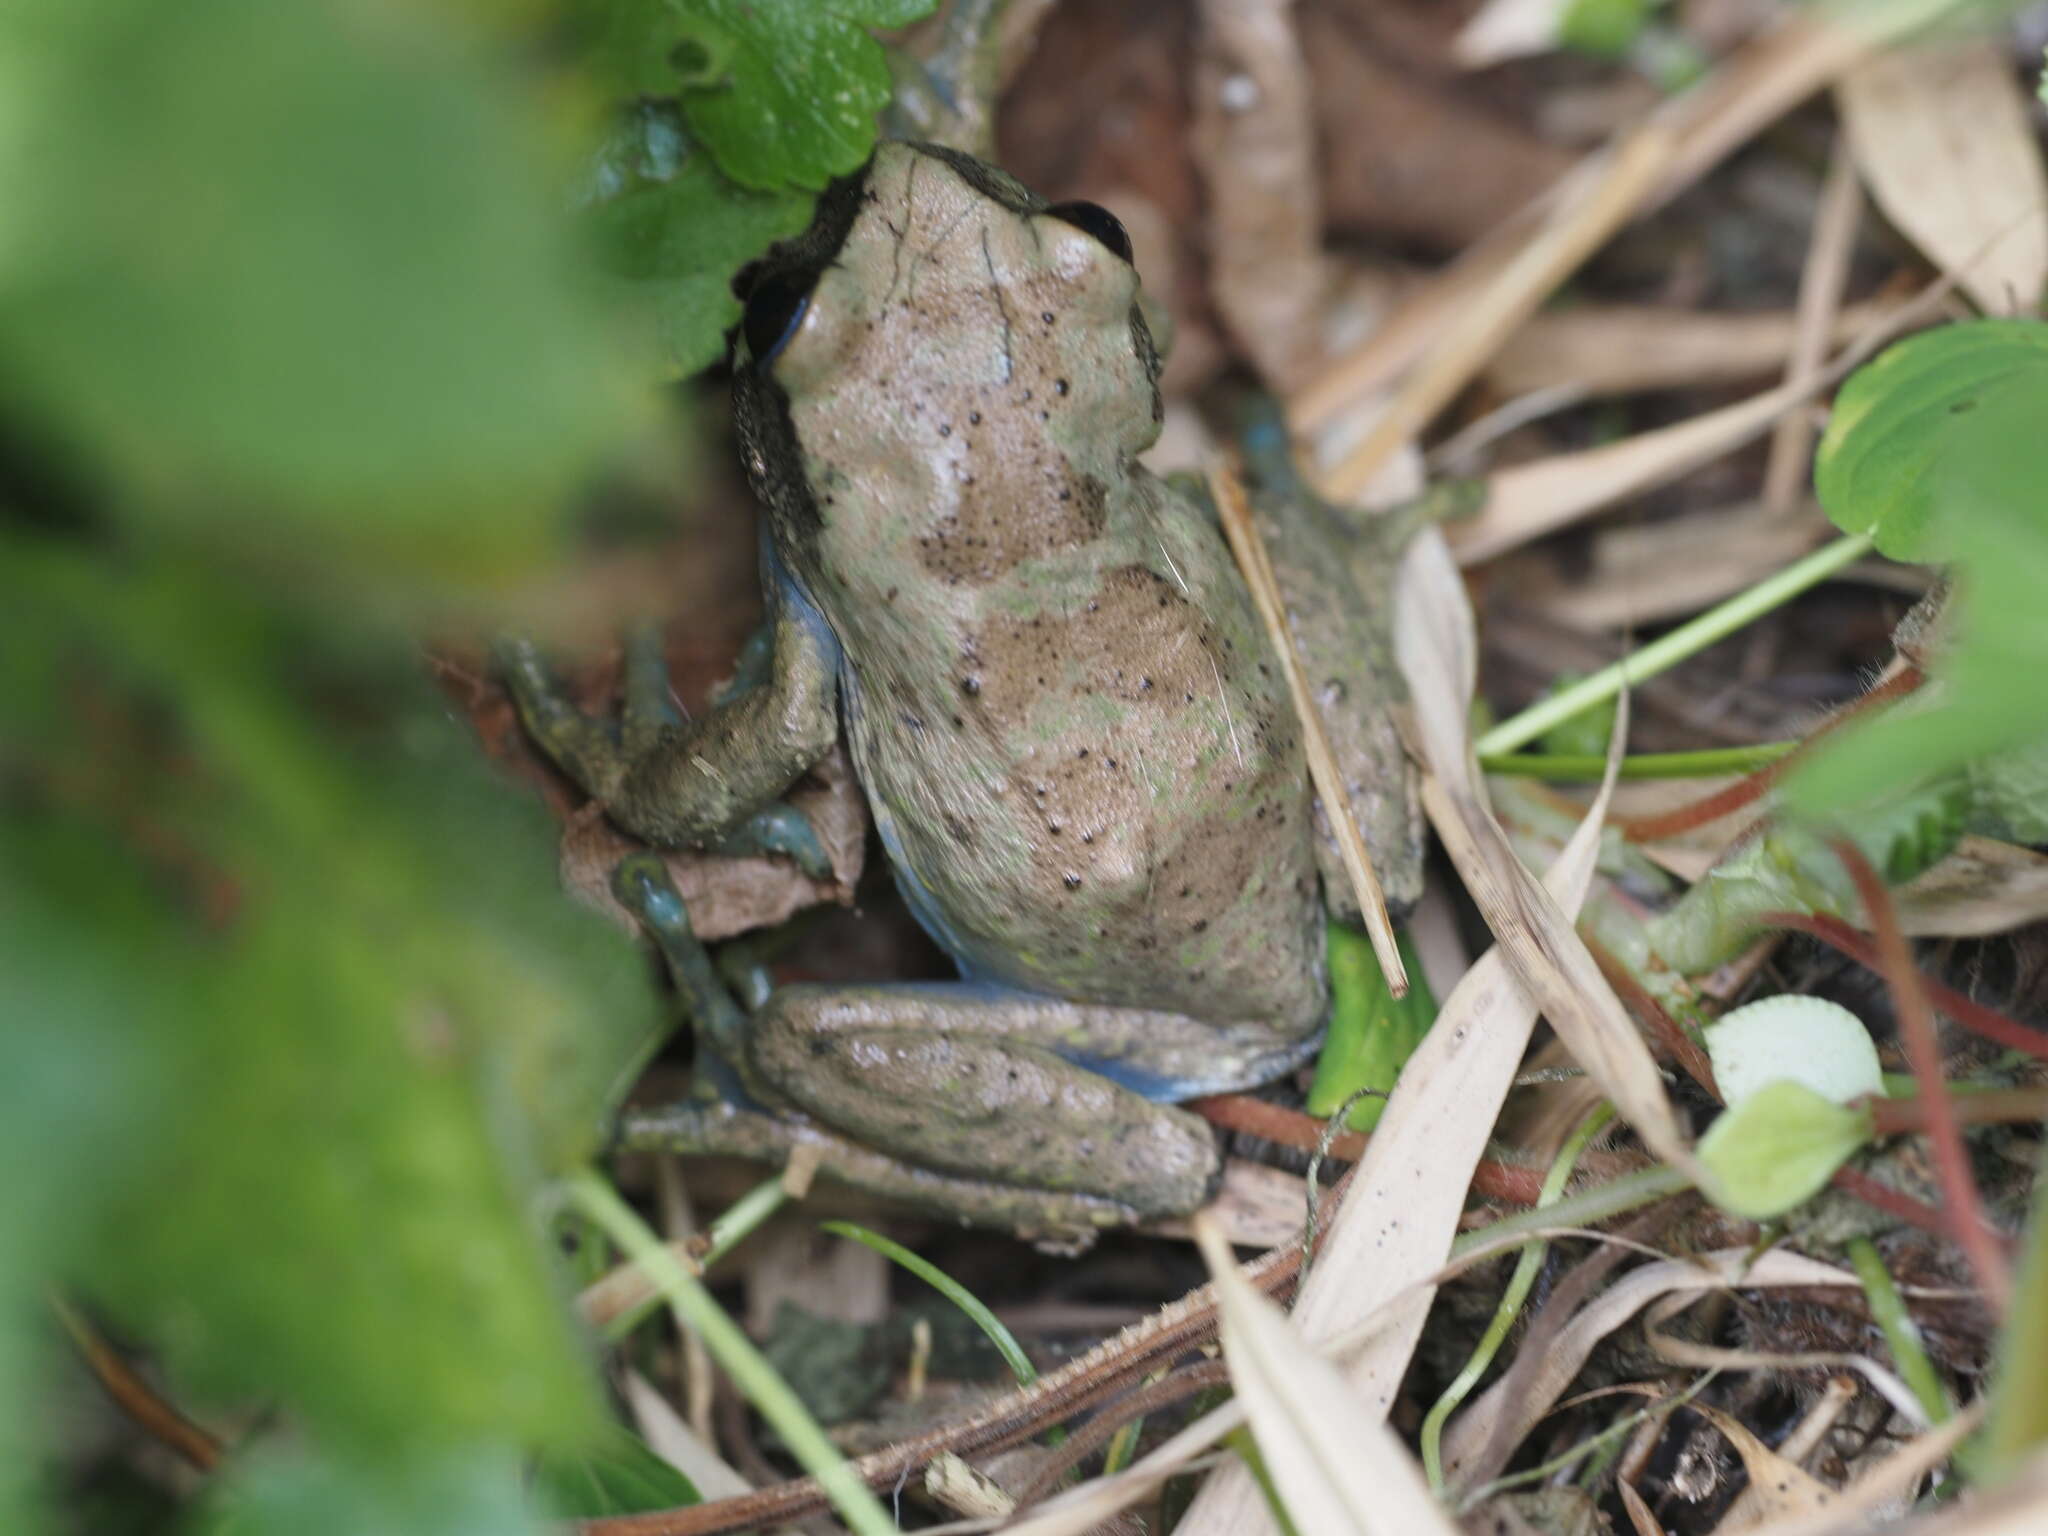 Image of Kivu tree frog